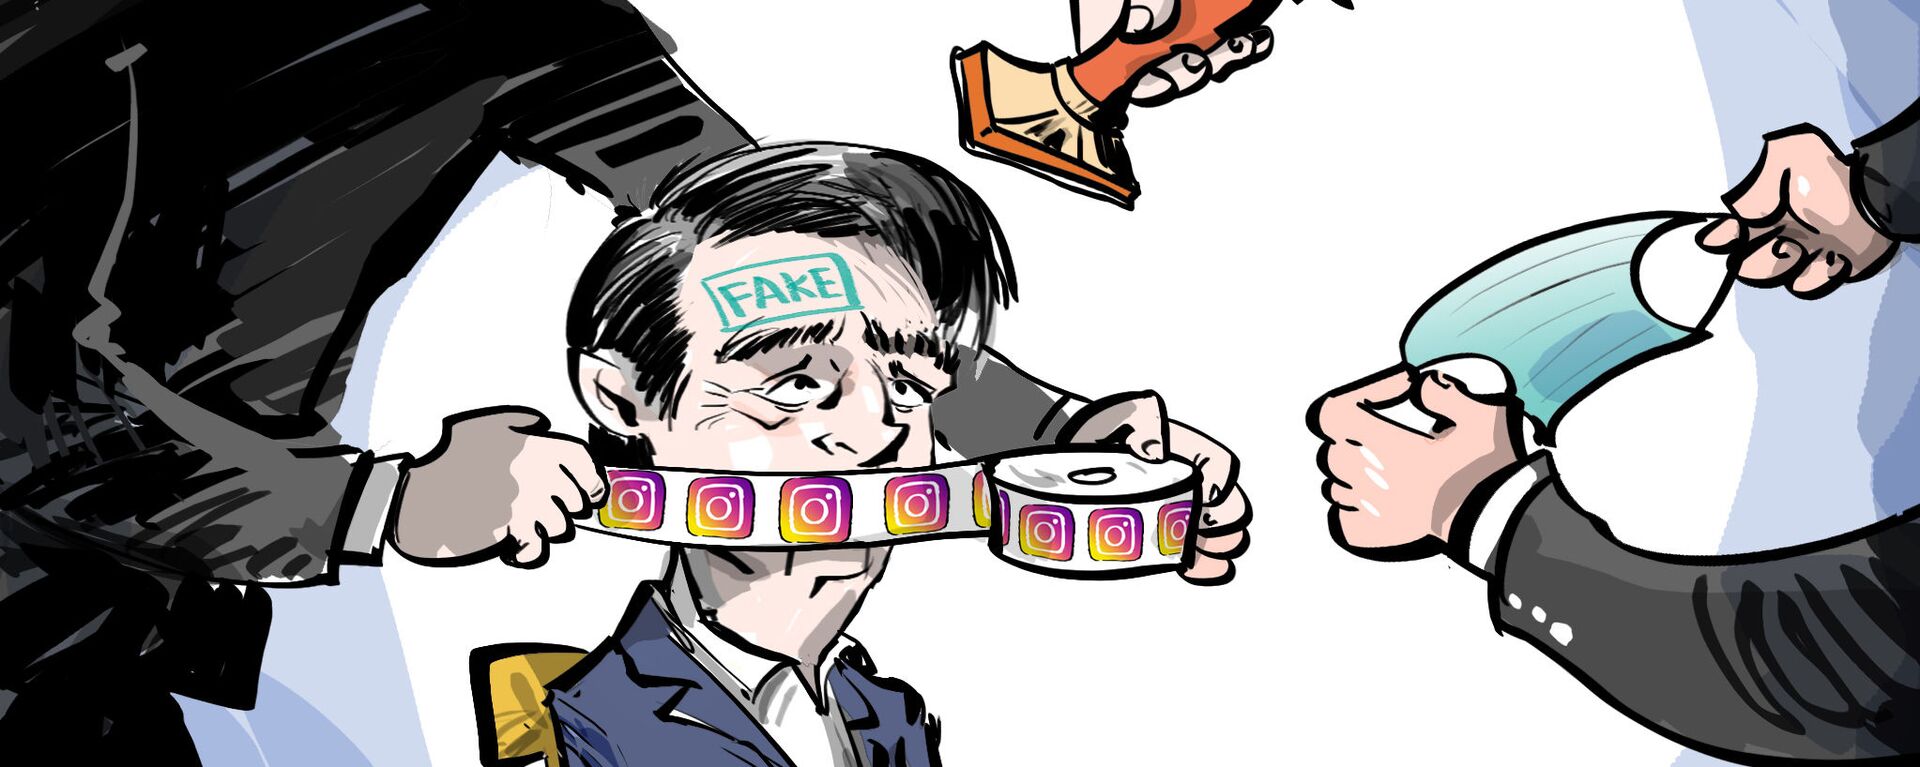 Instagram censura a Bolsonaro por difundir 'fake news' - Sputnik Mundo, 1920, 13.05.2020